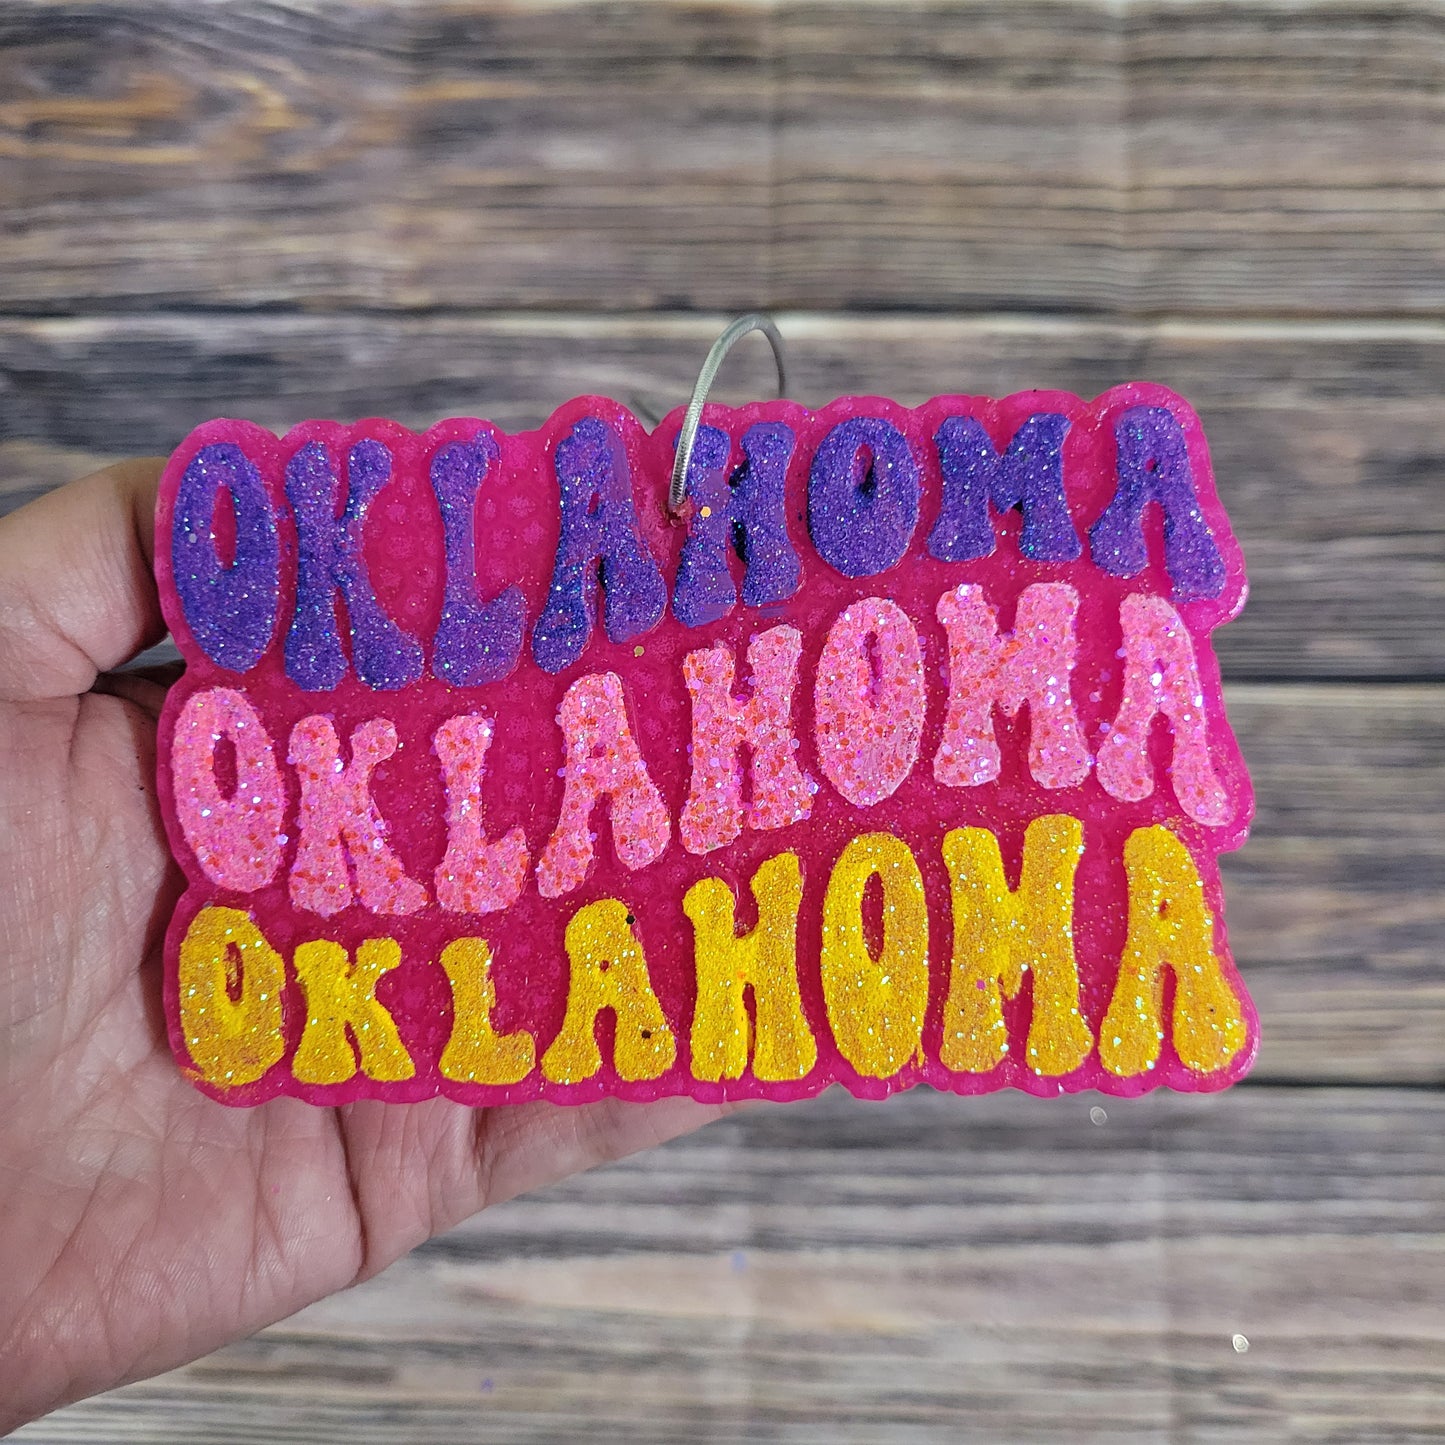 Oklahoma (Words)